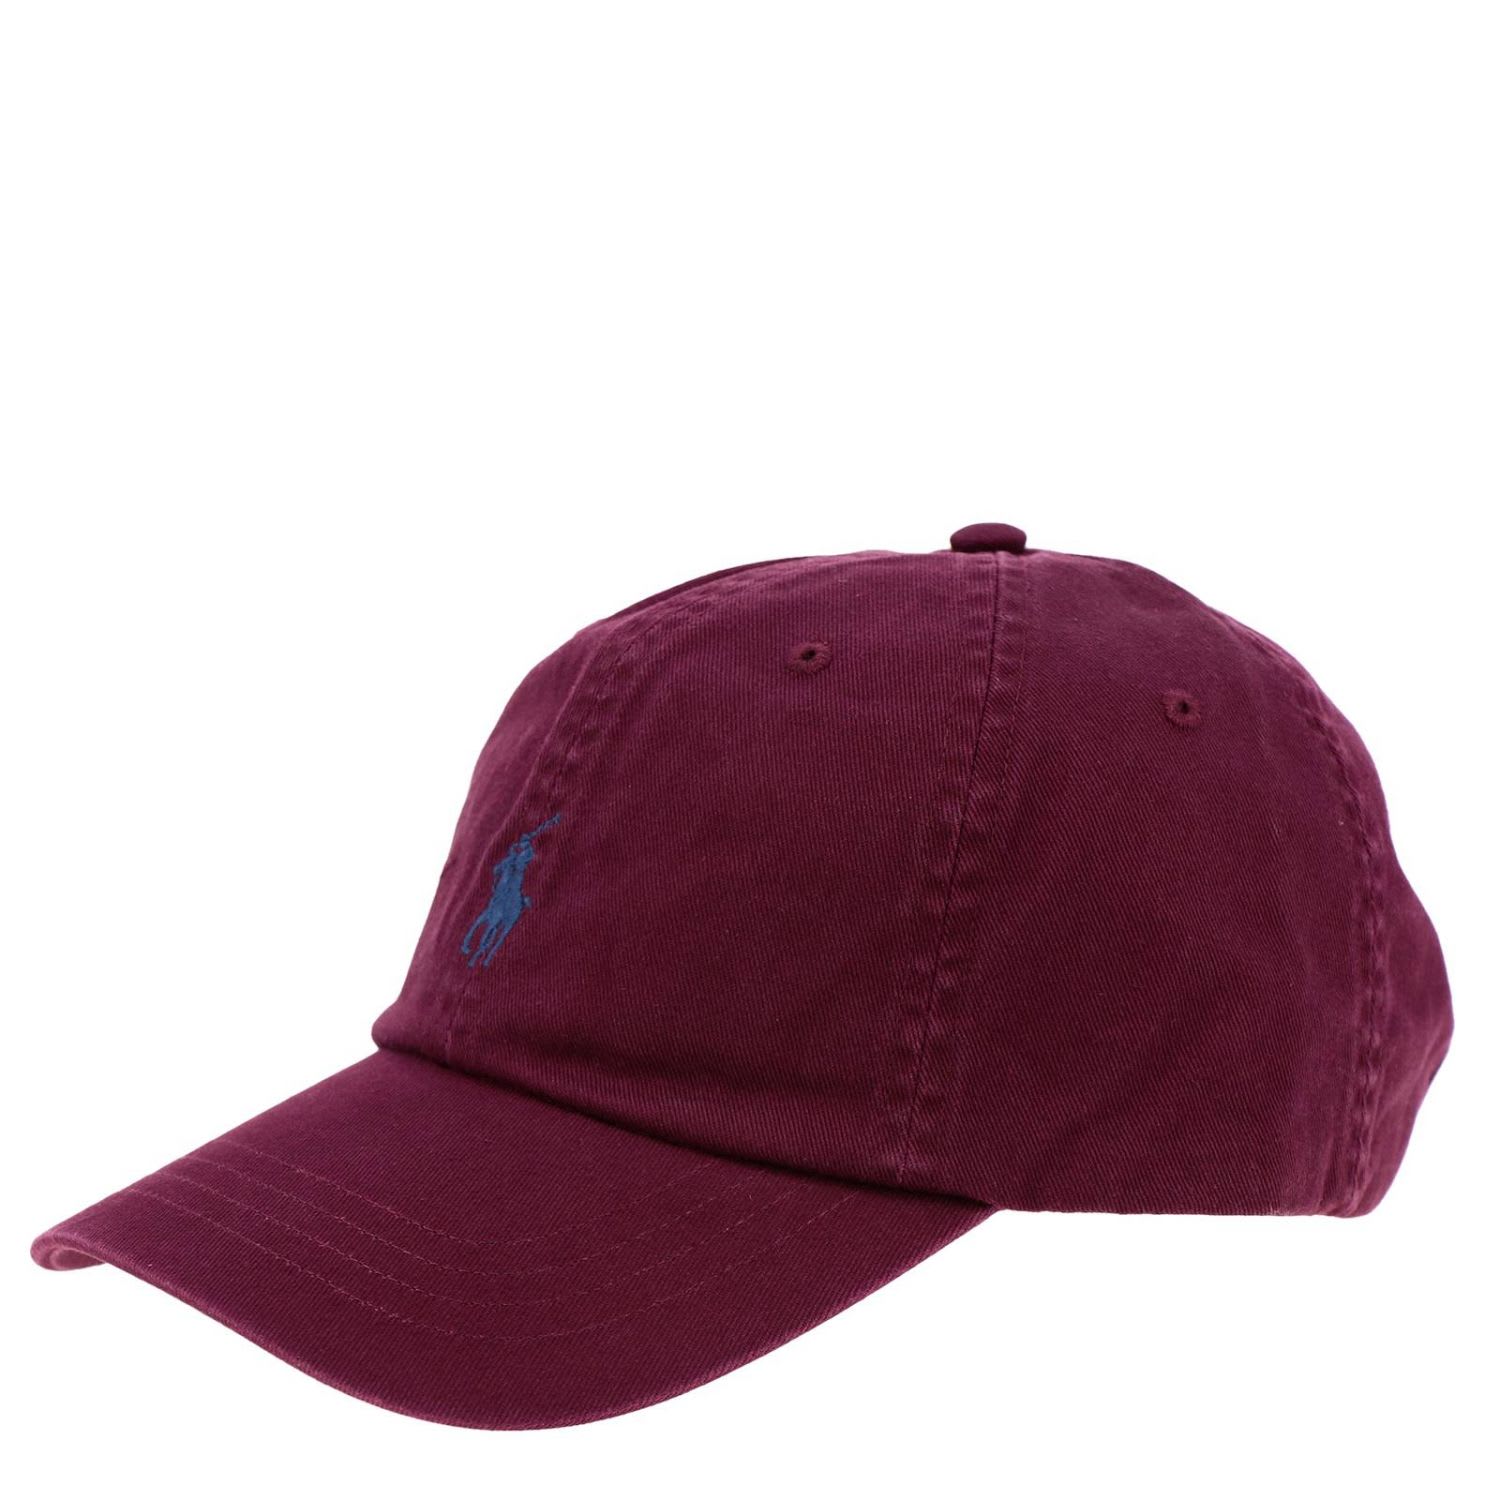 burgundy polo hat